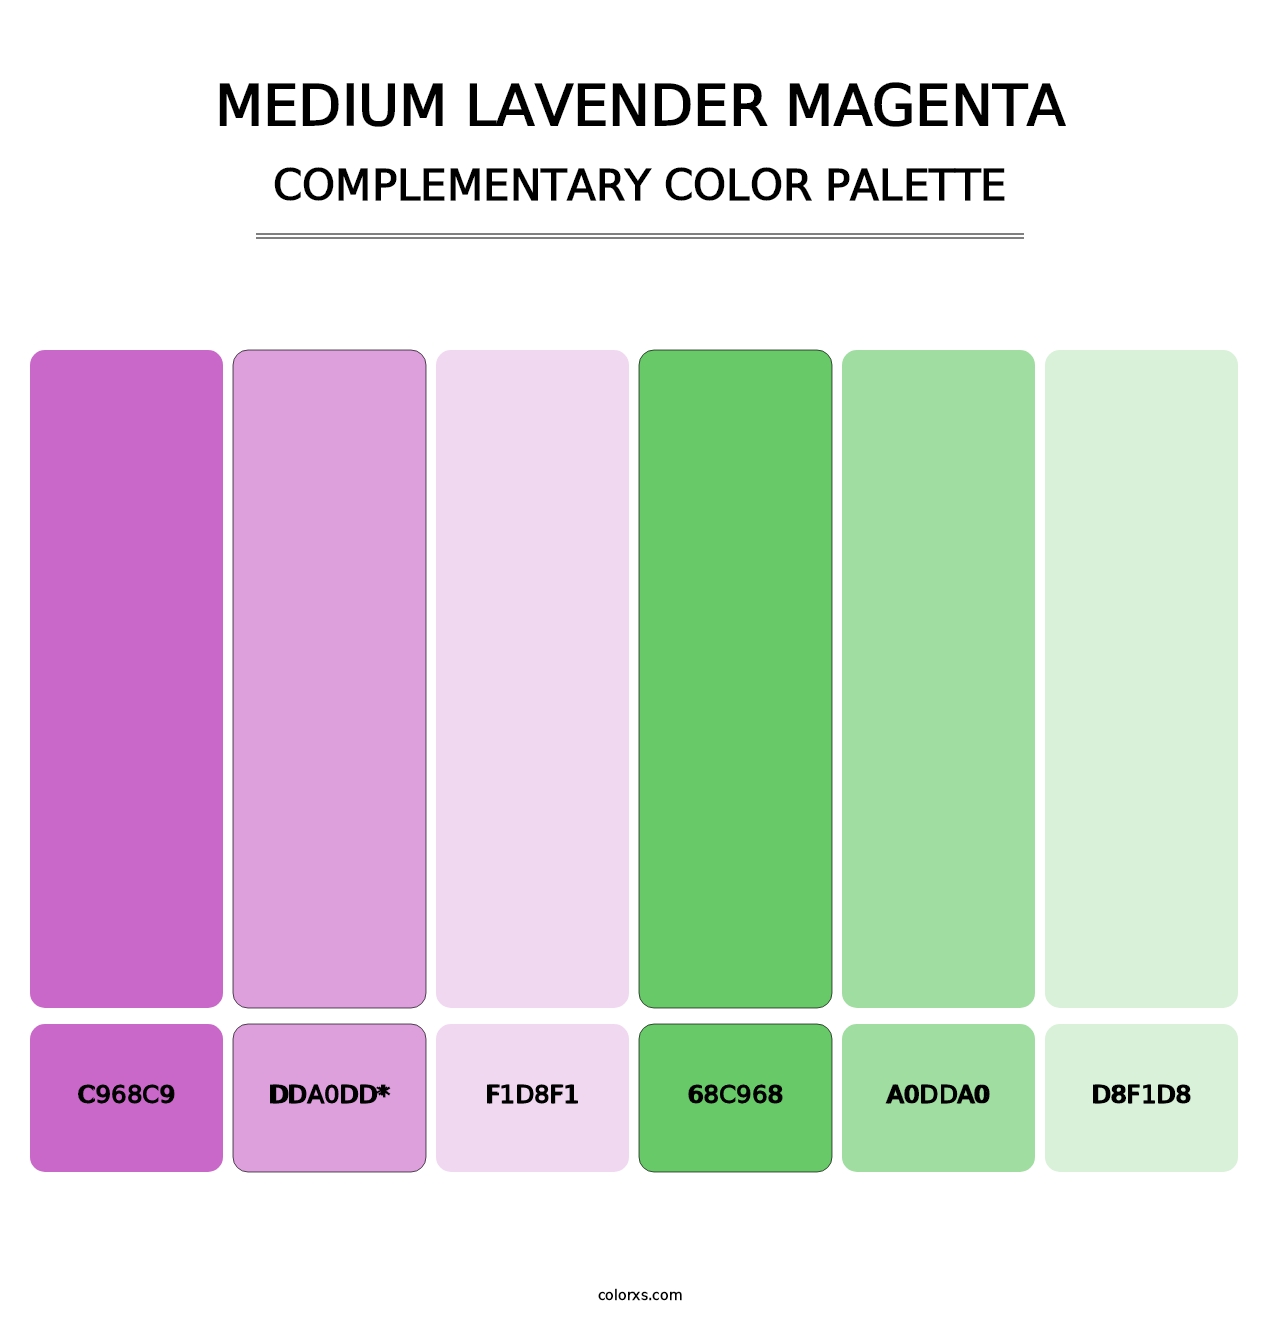 Medium Lavender Magenta - Complementary Color Palette